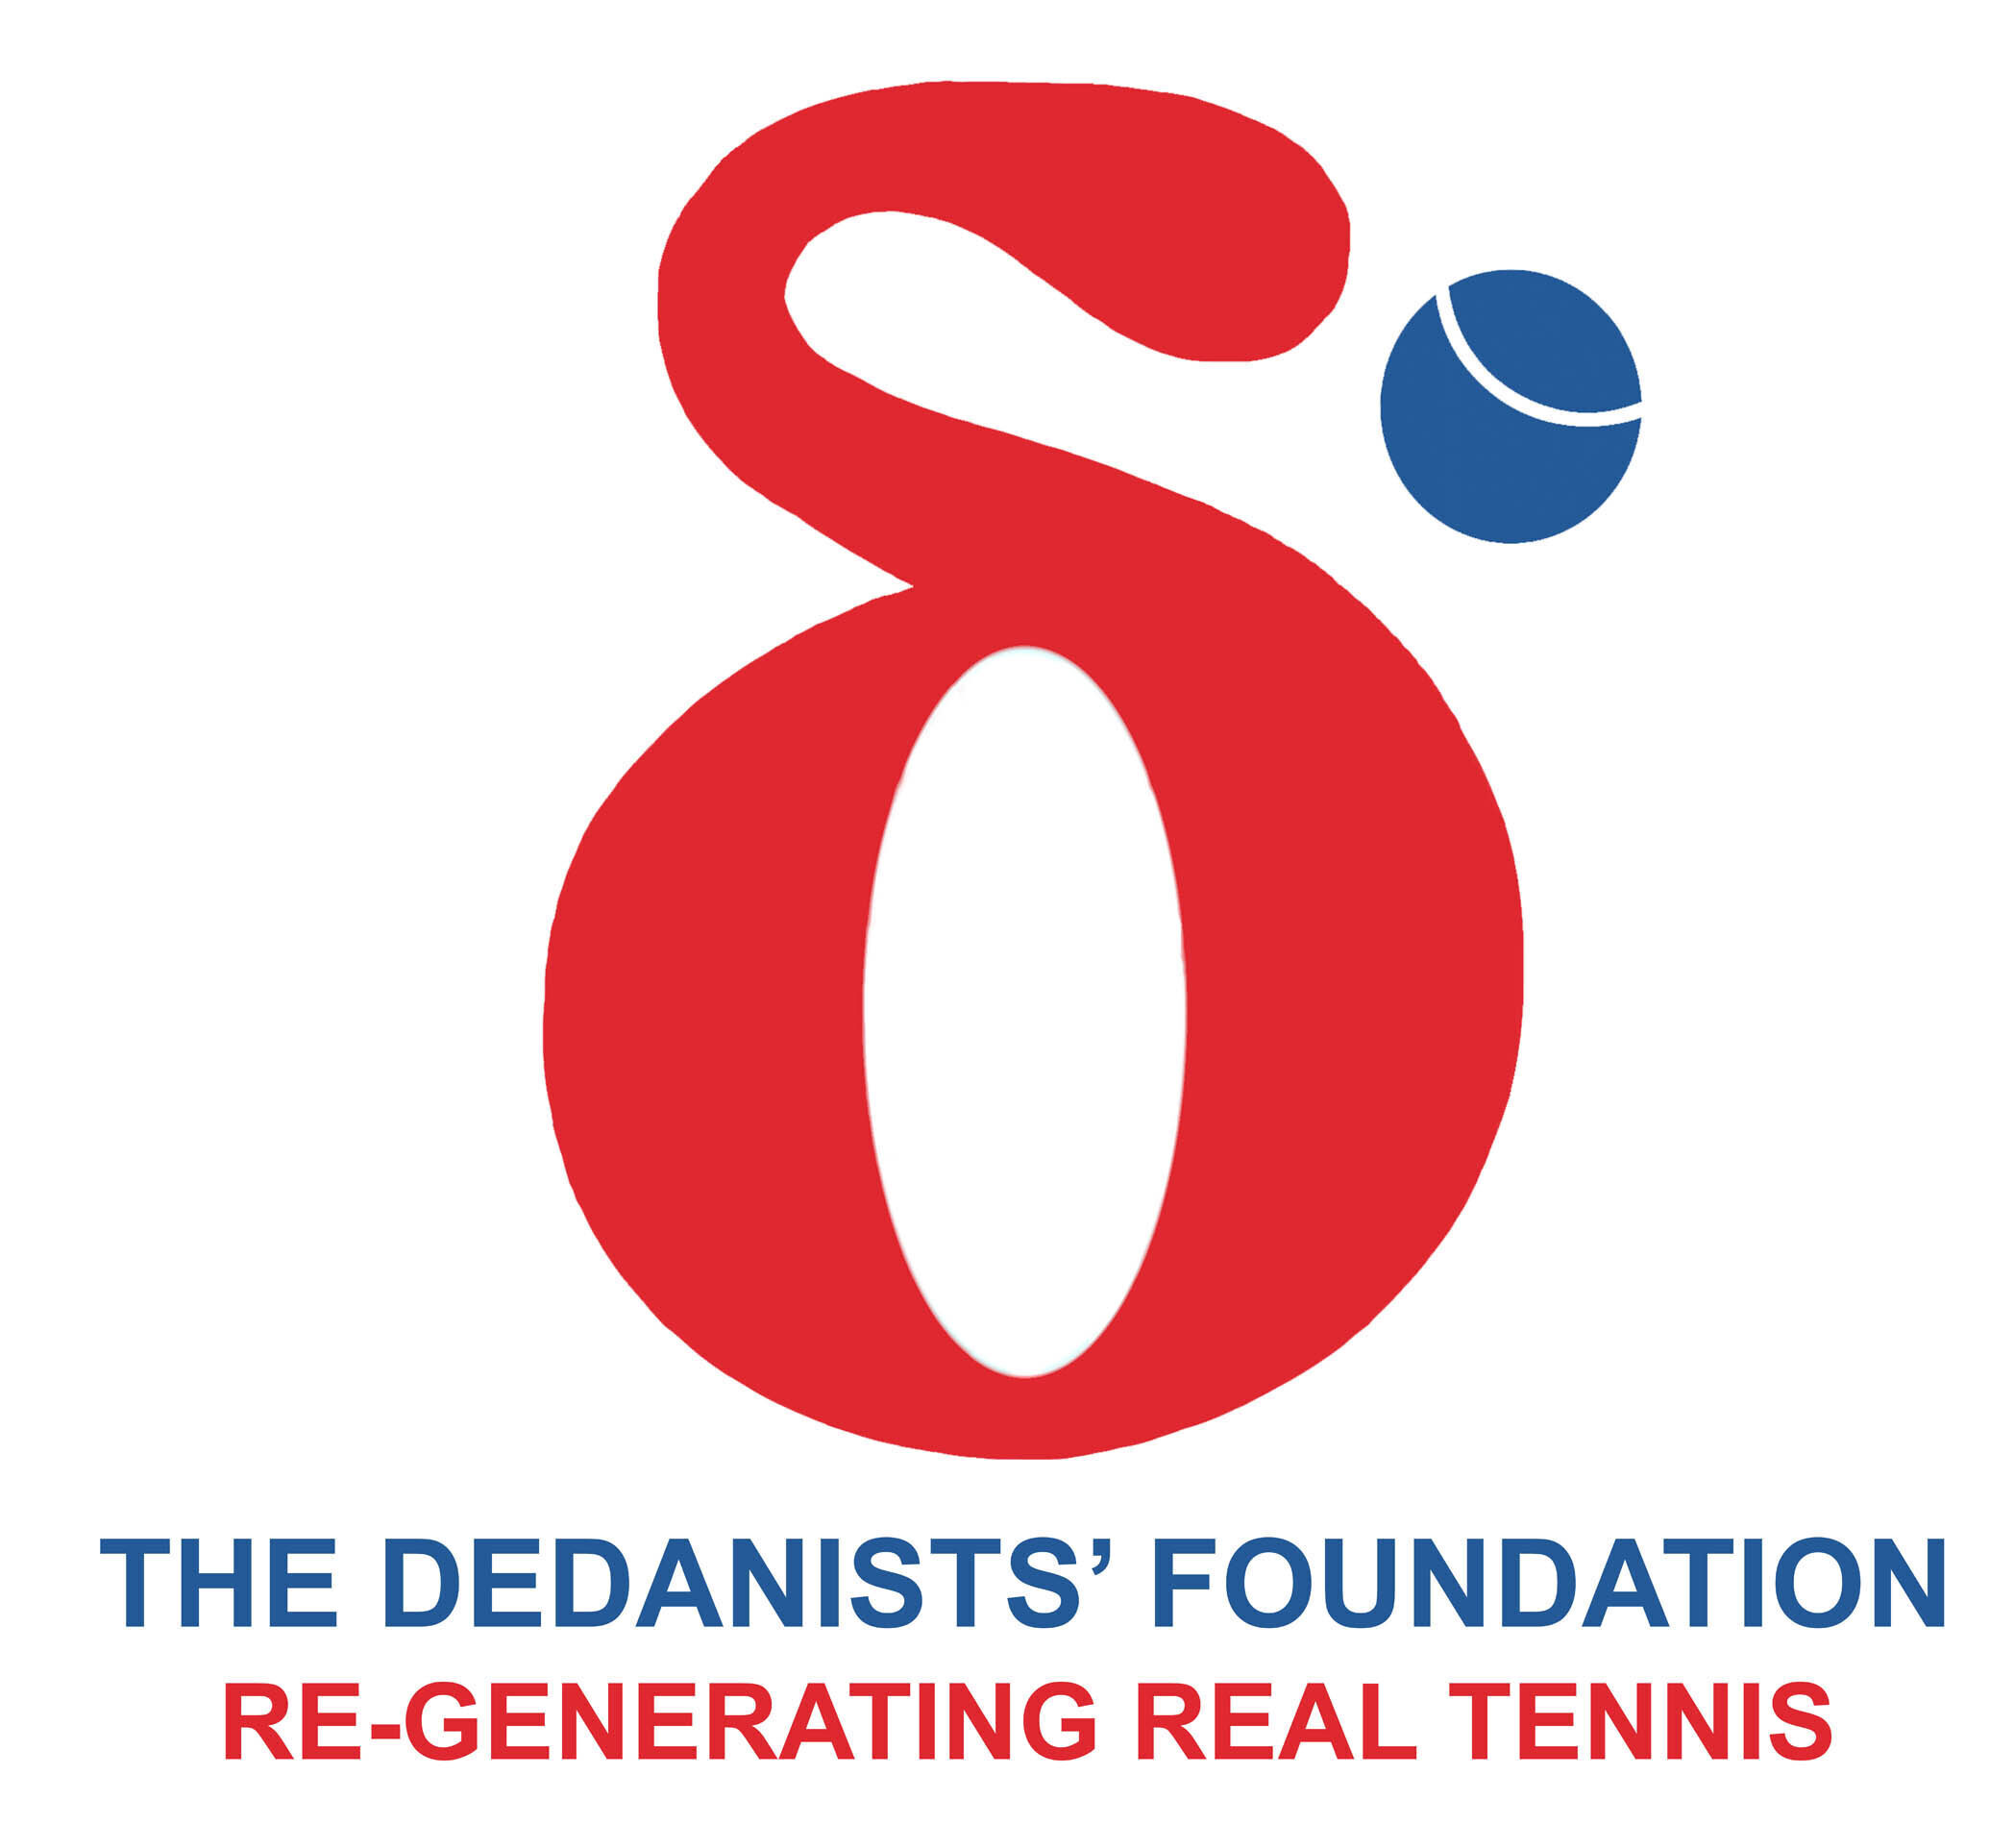 The Dedanists Foundation